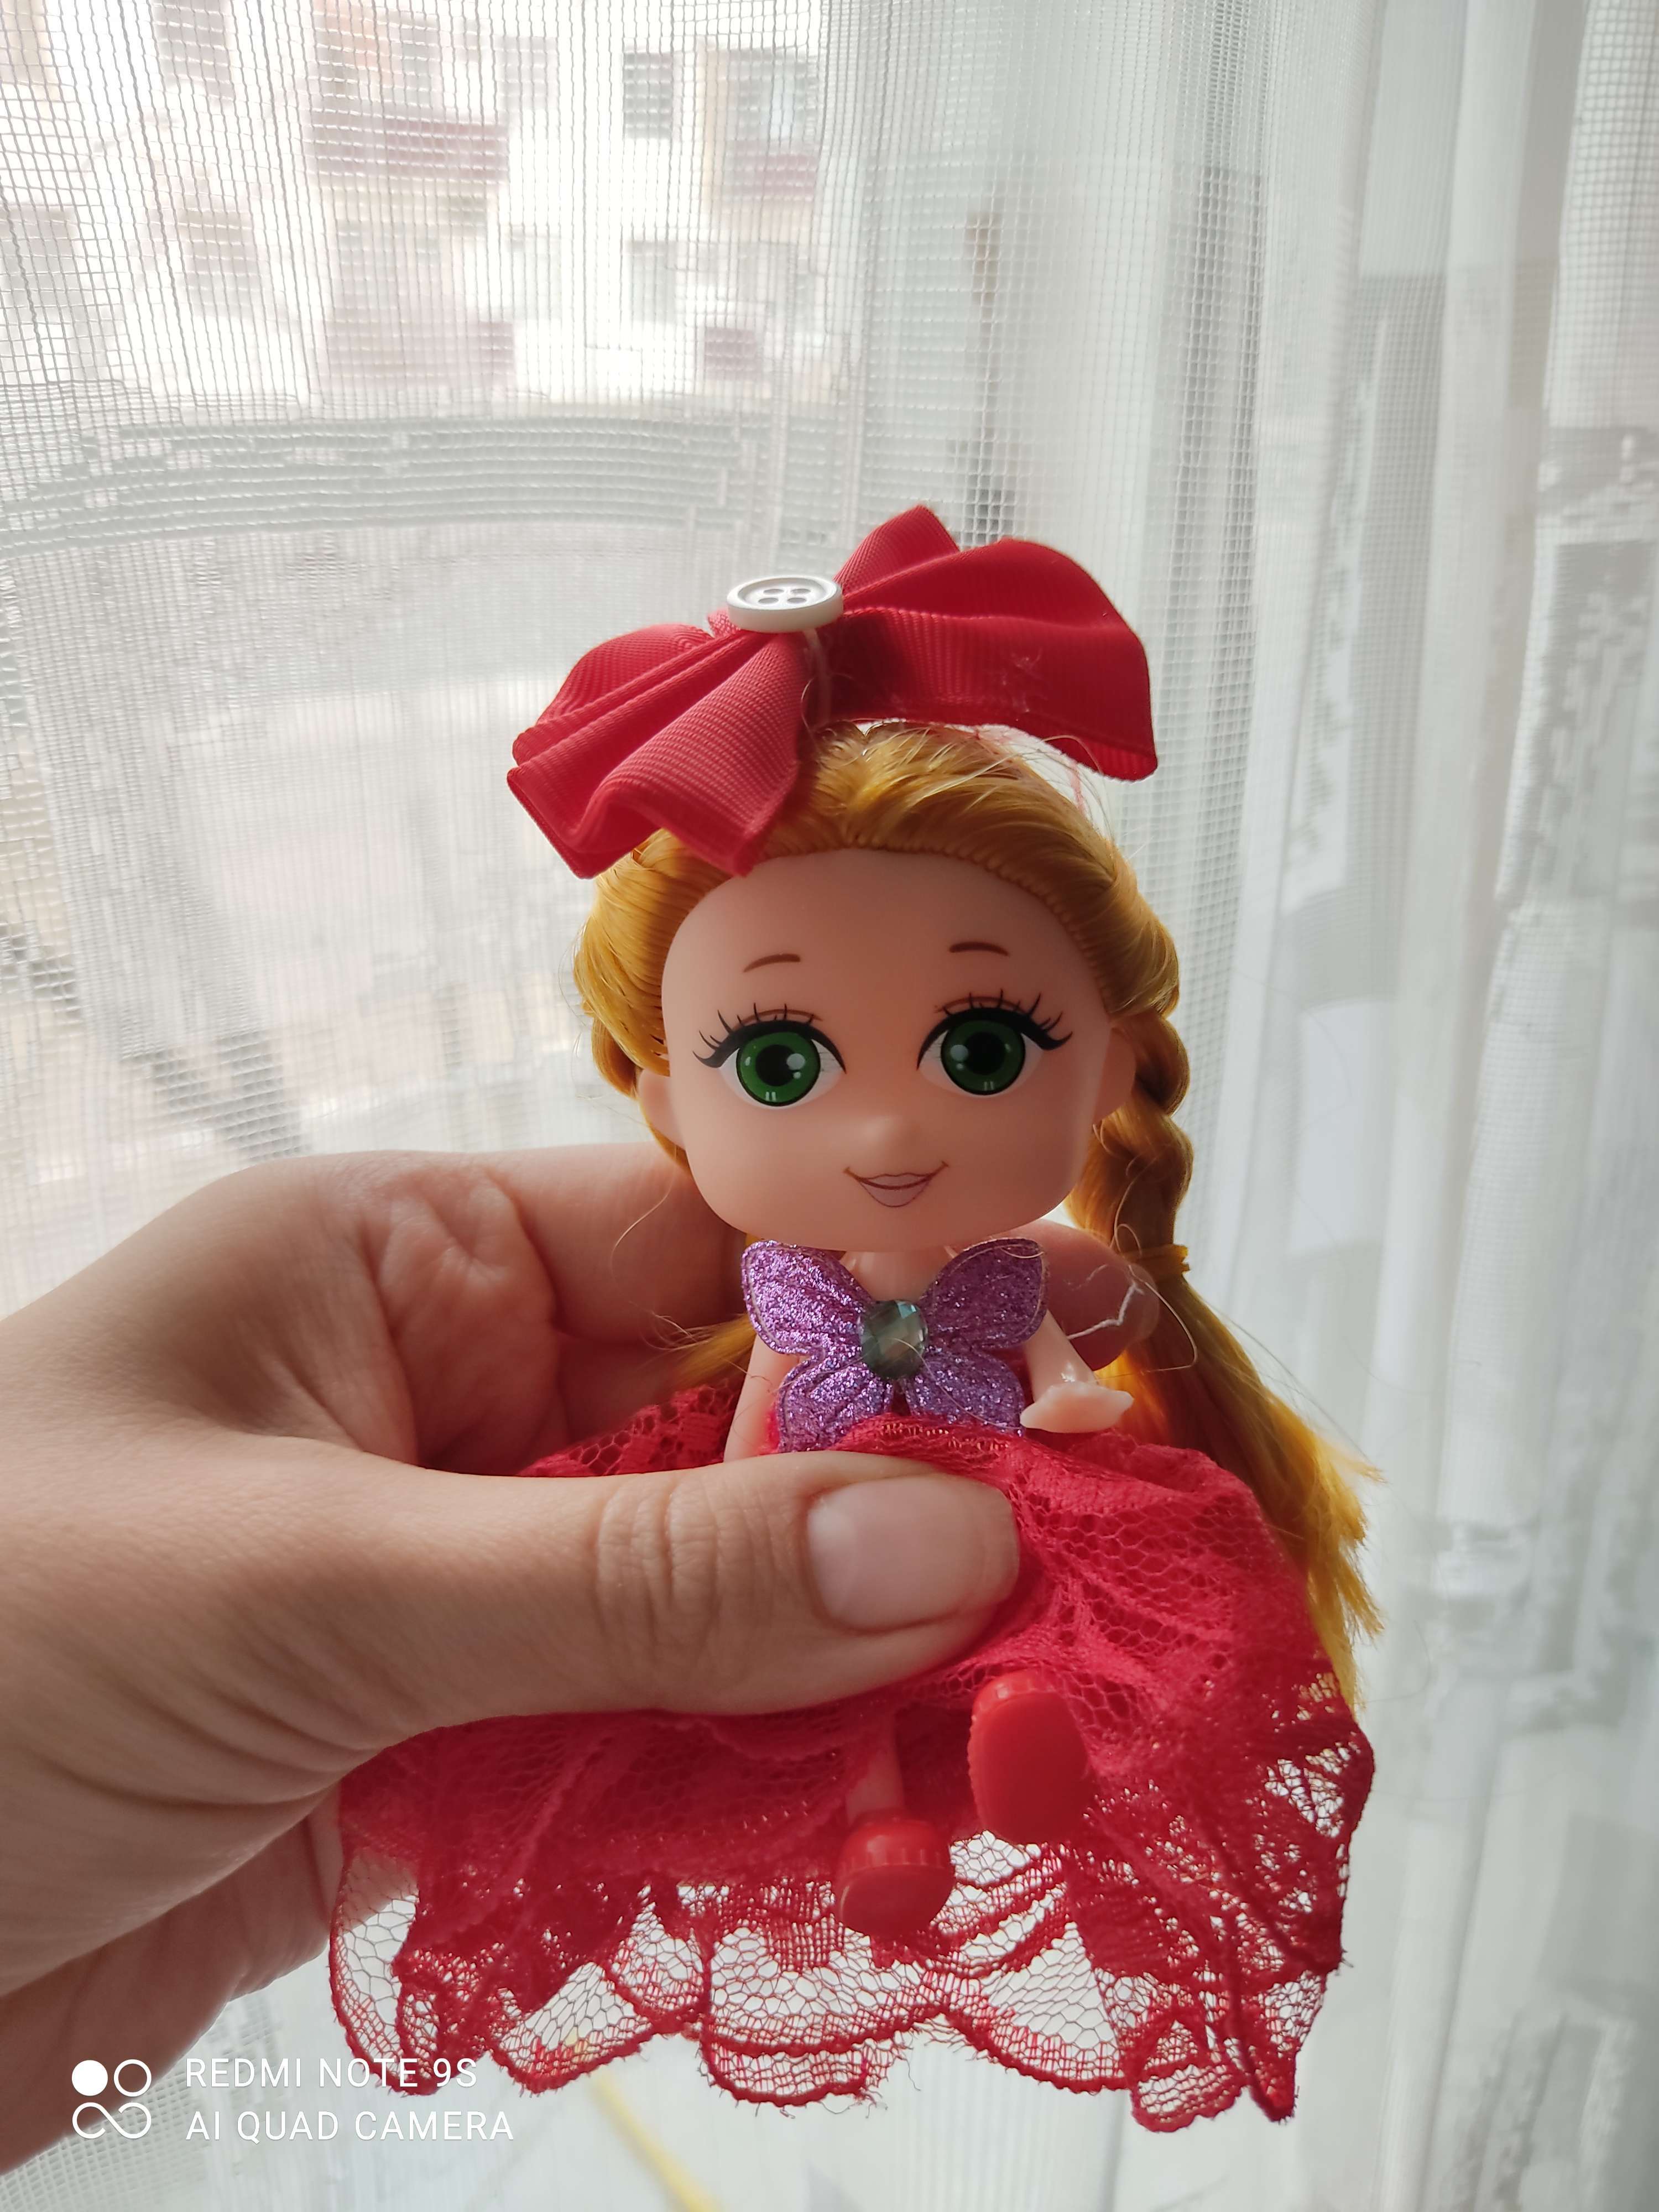 Фотография покупателя товара Кукла малышка «Малышке», МИКС